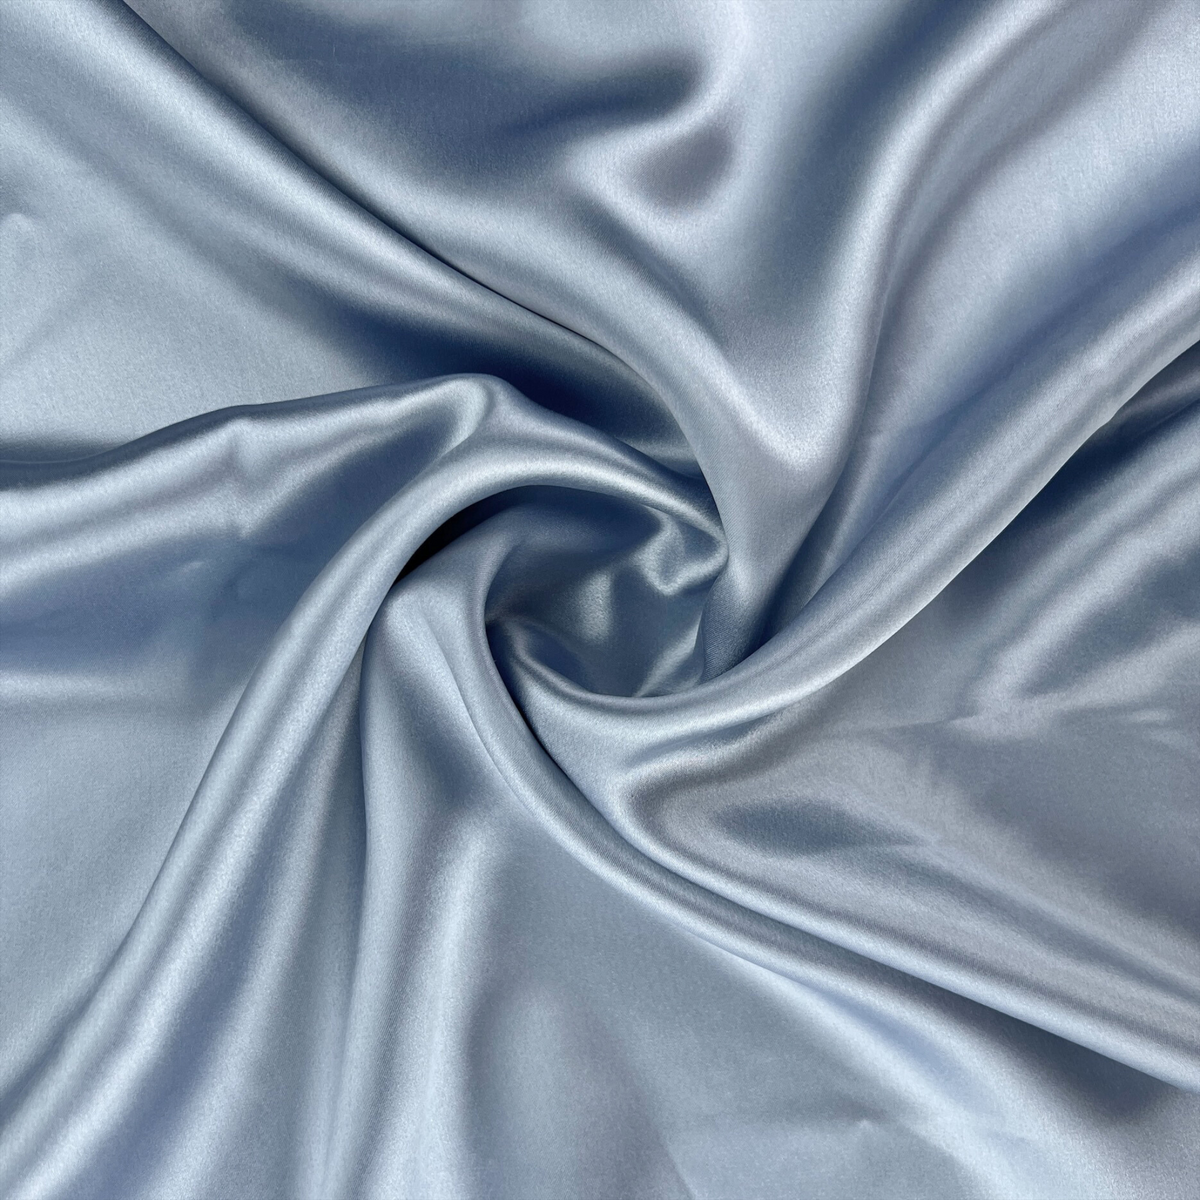 Mulberry Park Silks Aromatherapy Lavender Eye Pillows - Steel Blue